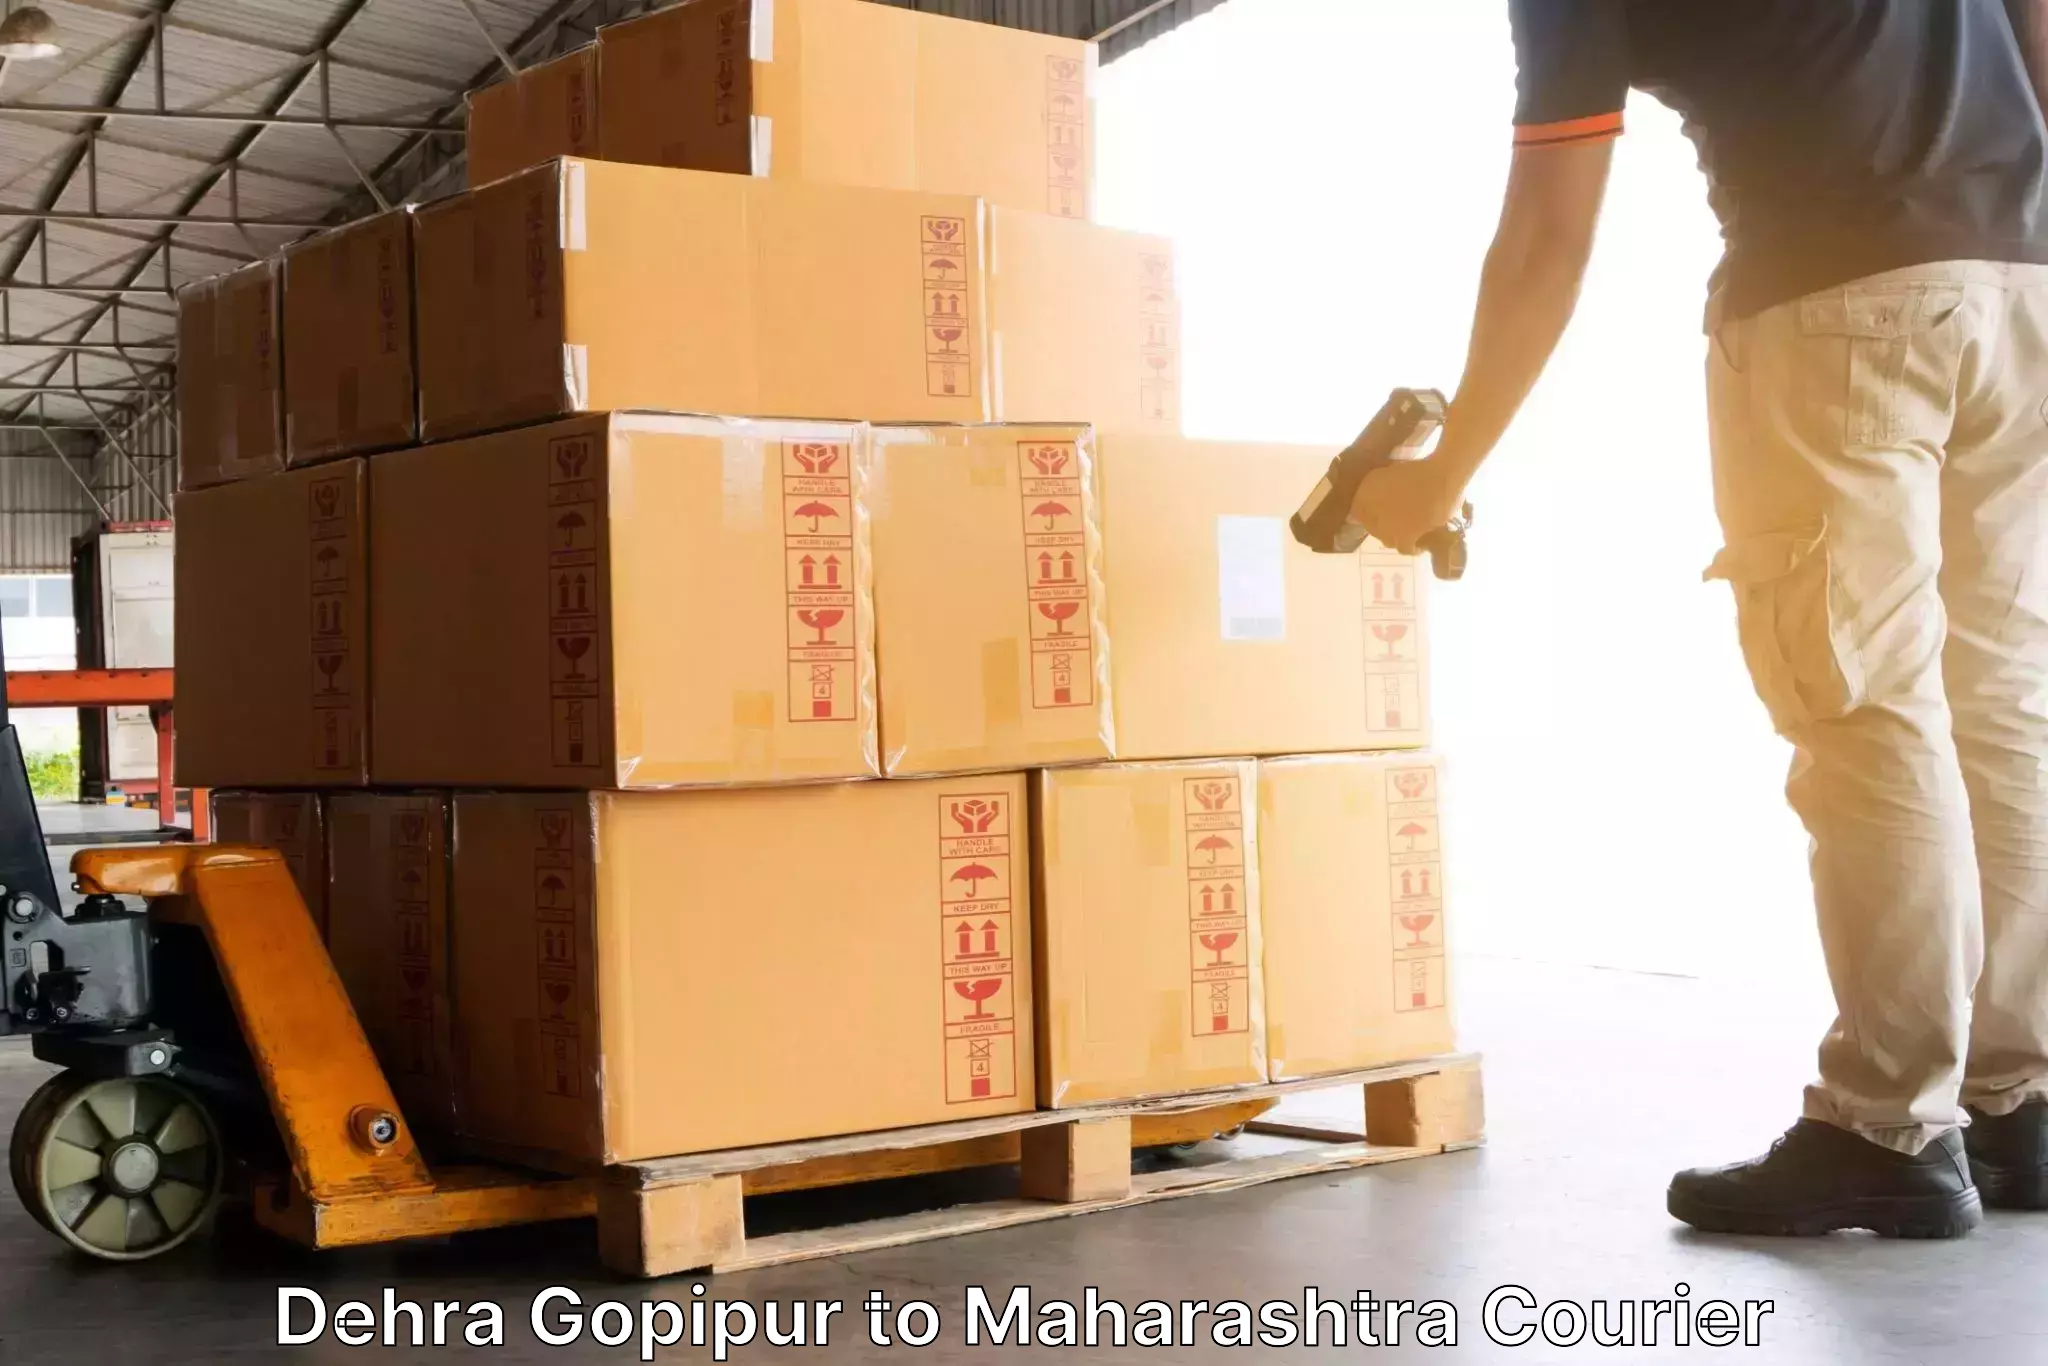 Speedy delivery service Dehra Gopipur to Mumbai